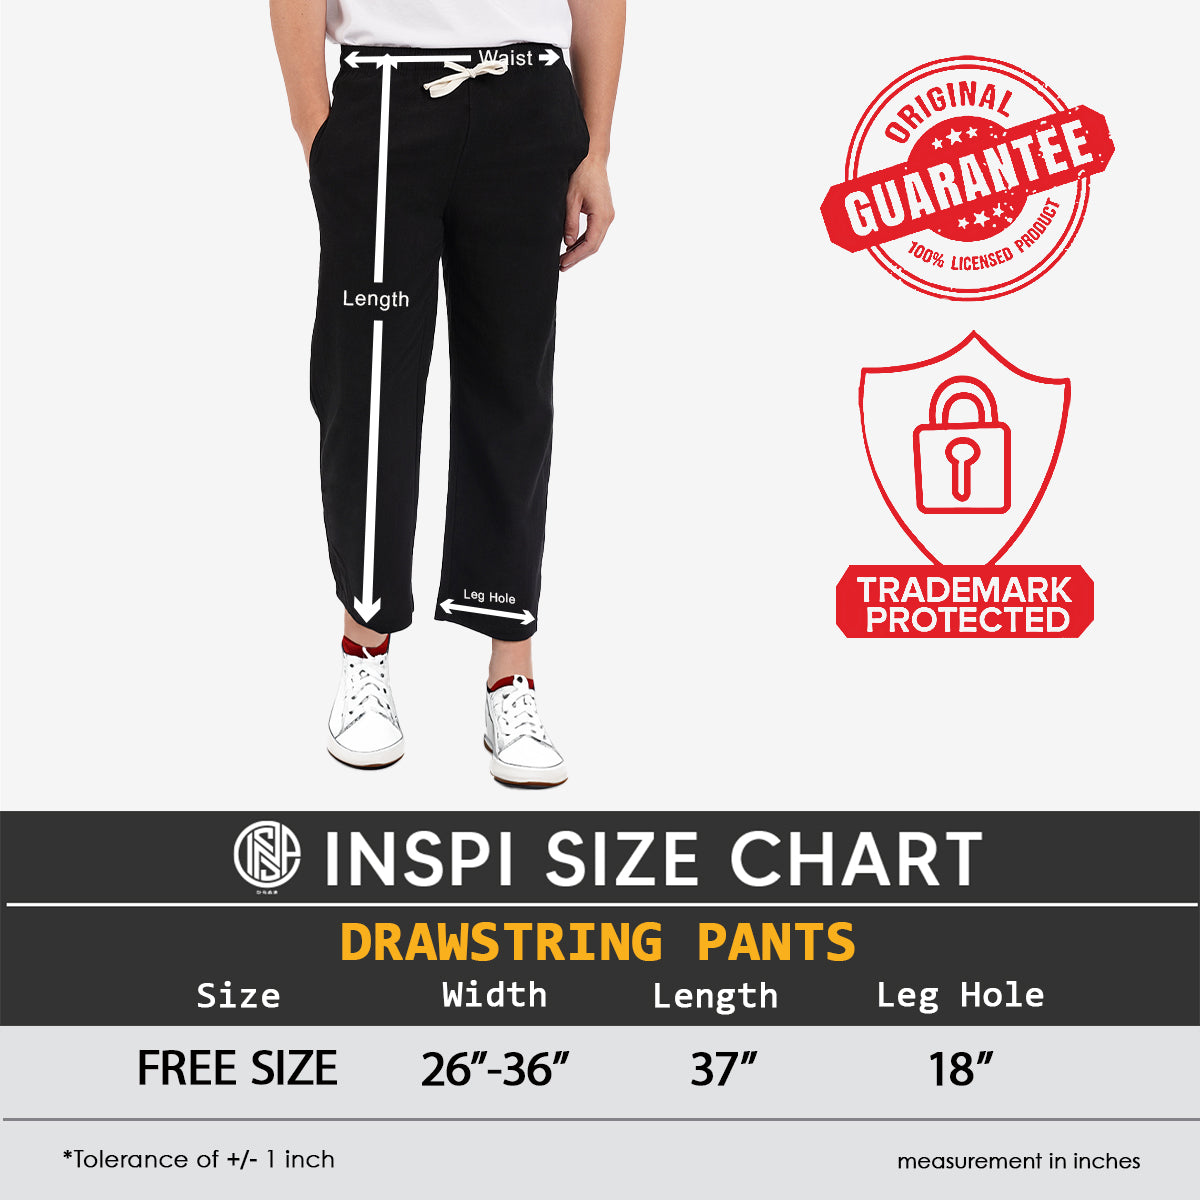 INSPI Drawstring Pants Caramel